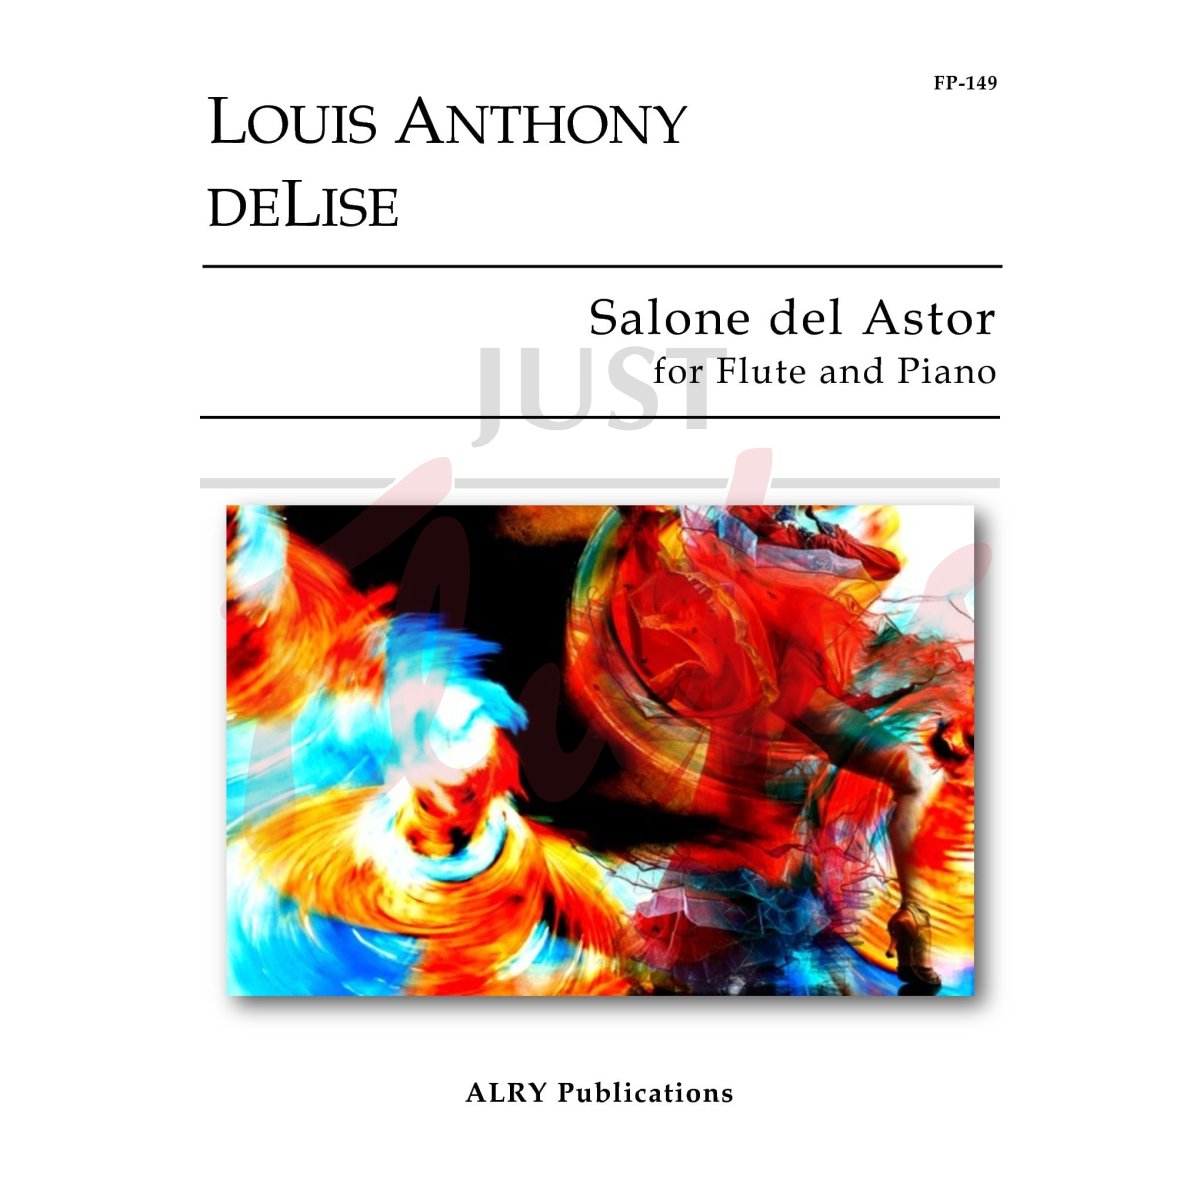 Salone del Astor for Flute and Piano